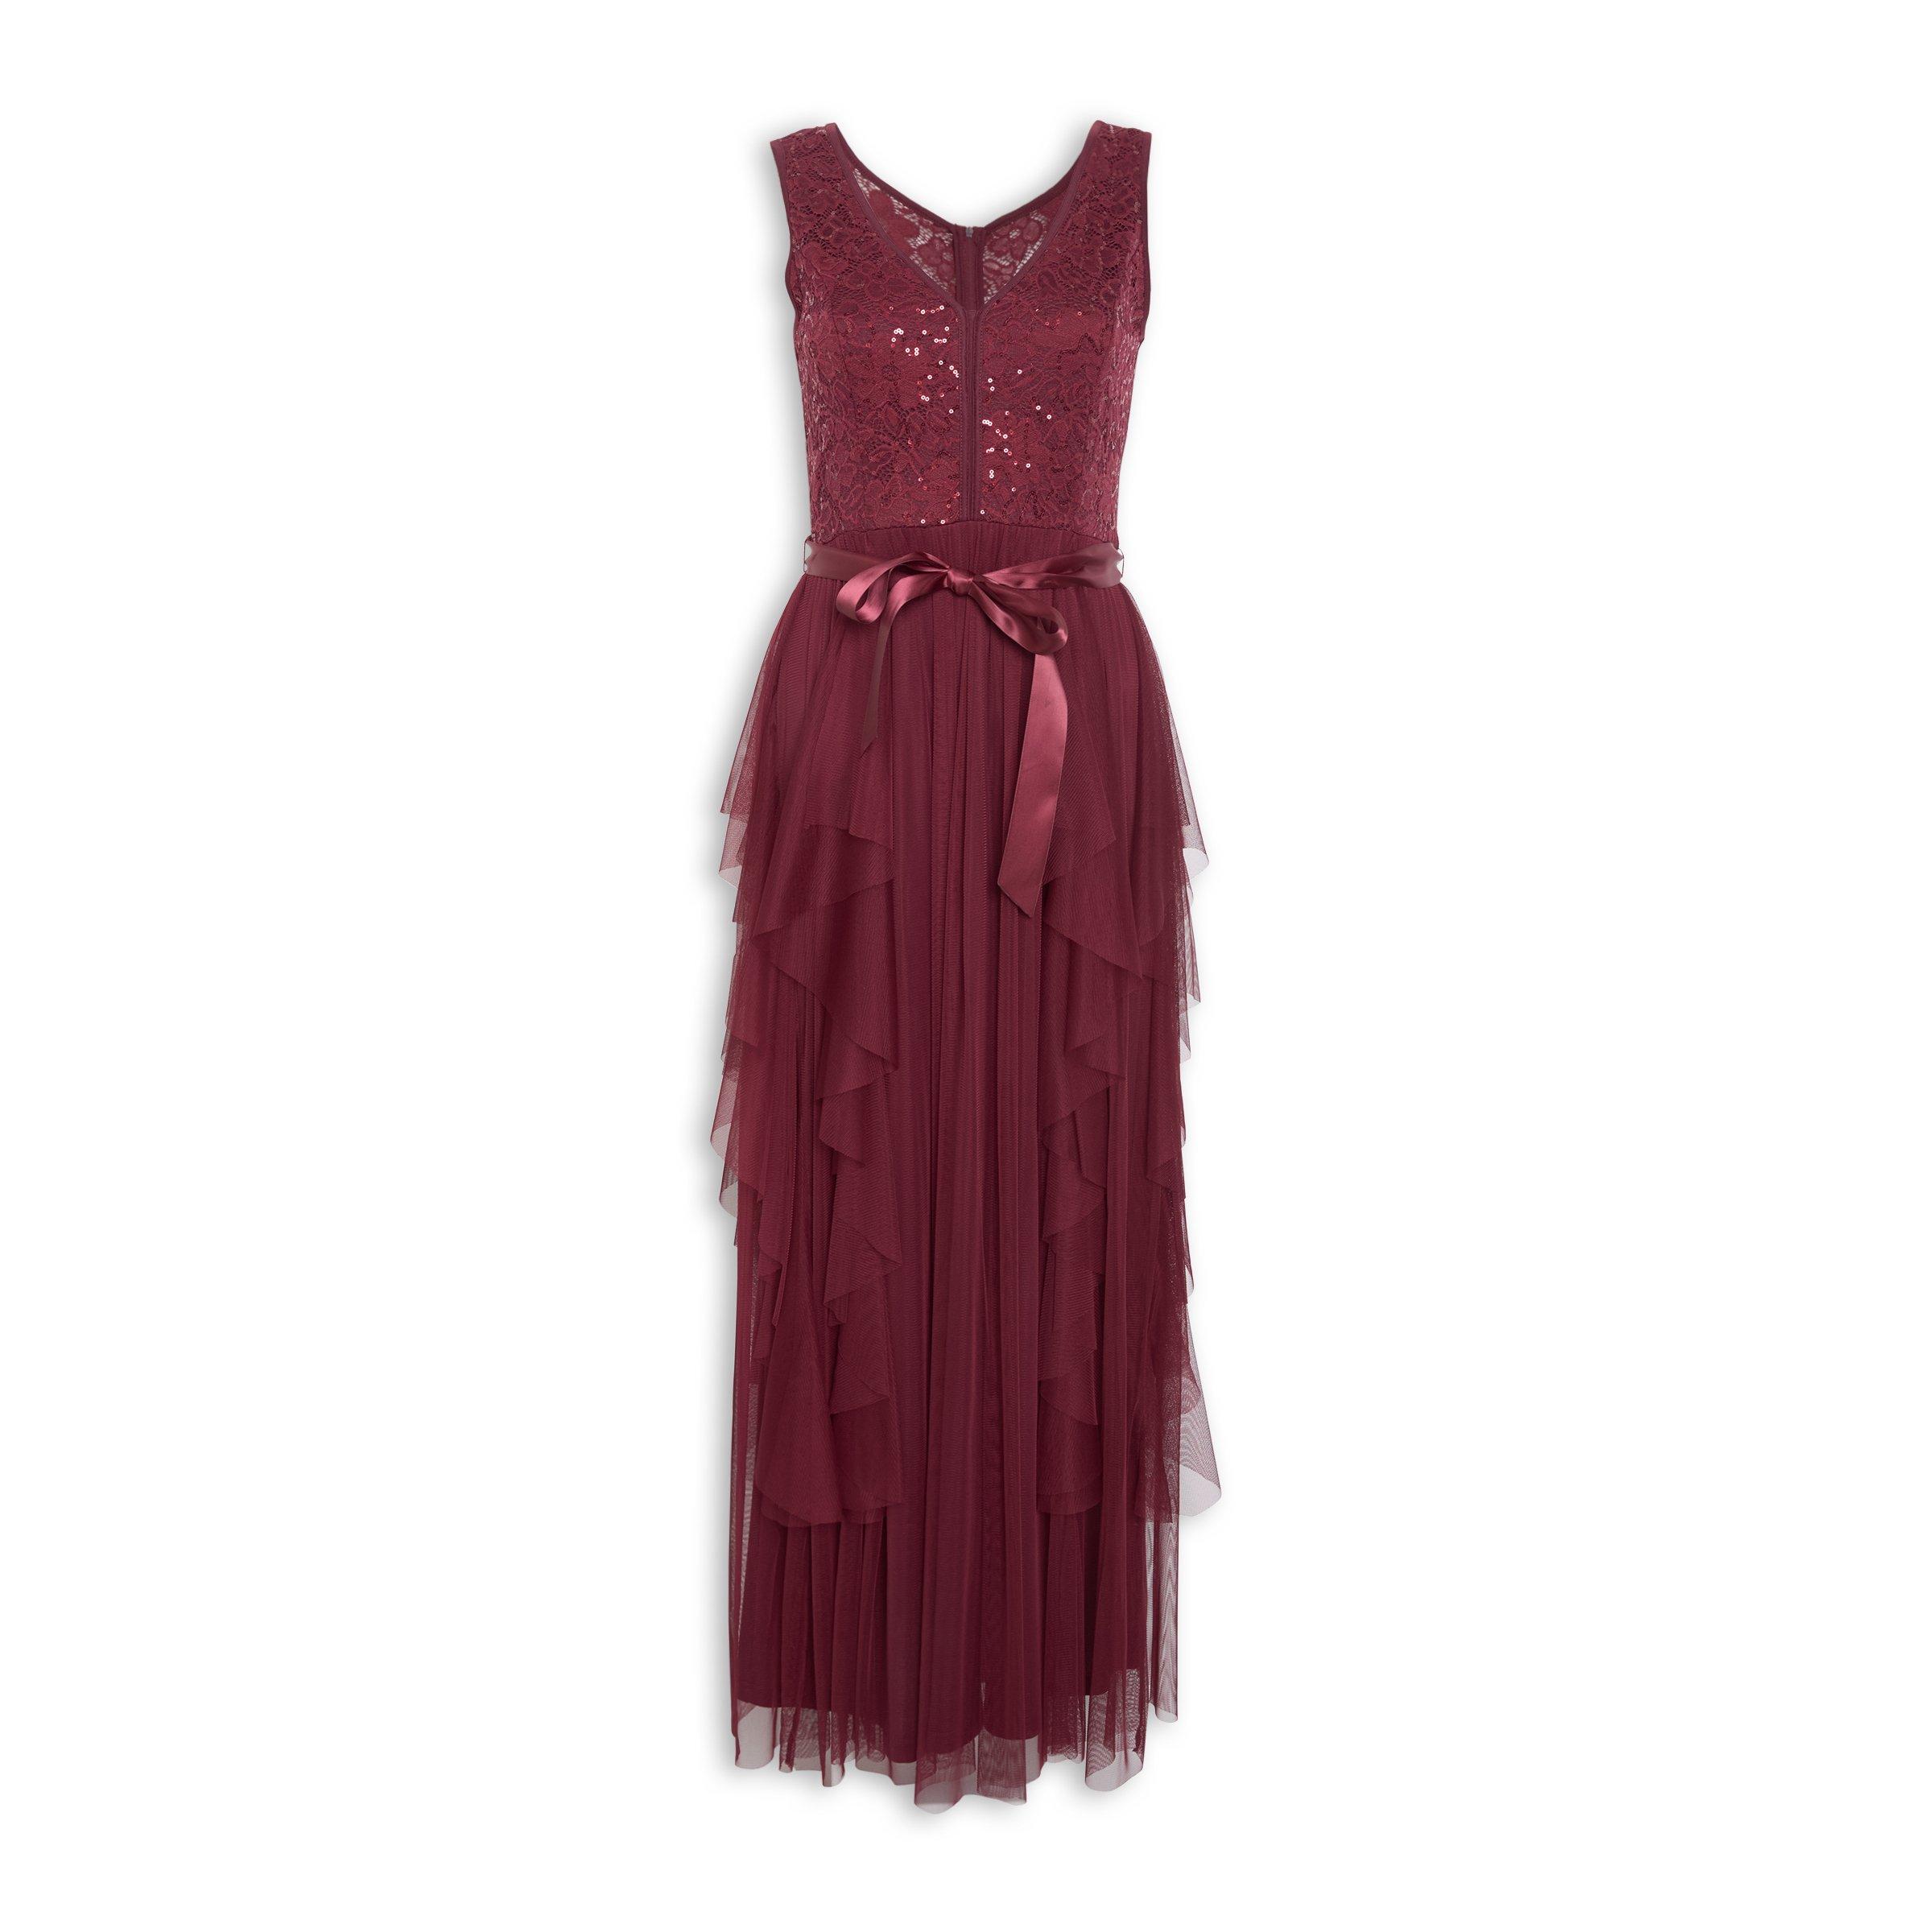 Buy Truworths Burgundy Lace Tulle Dress Online Truworths | Free Hot ...